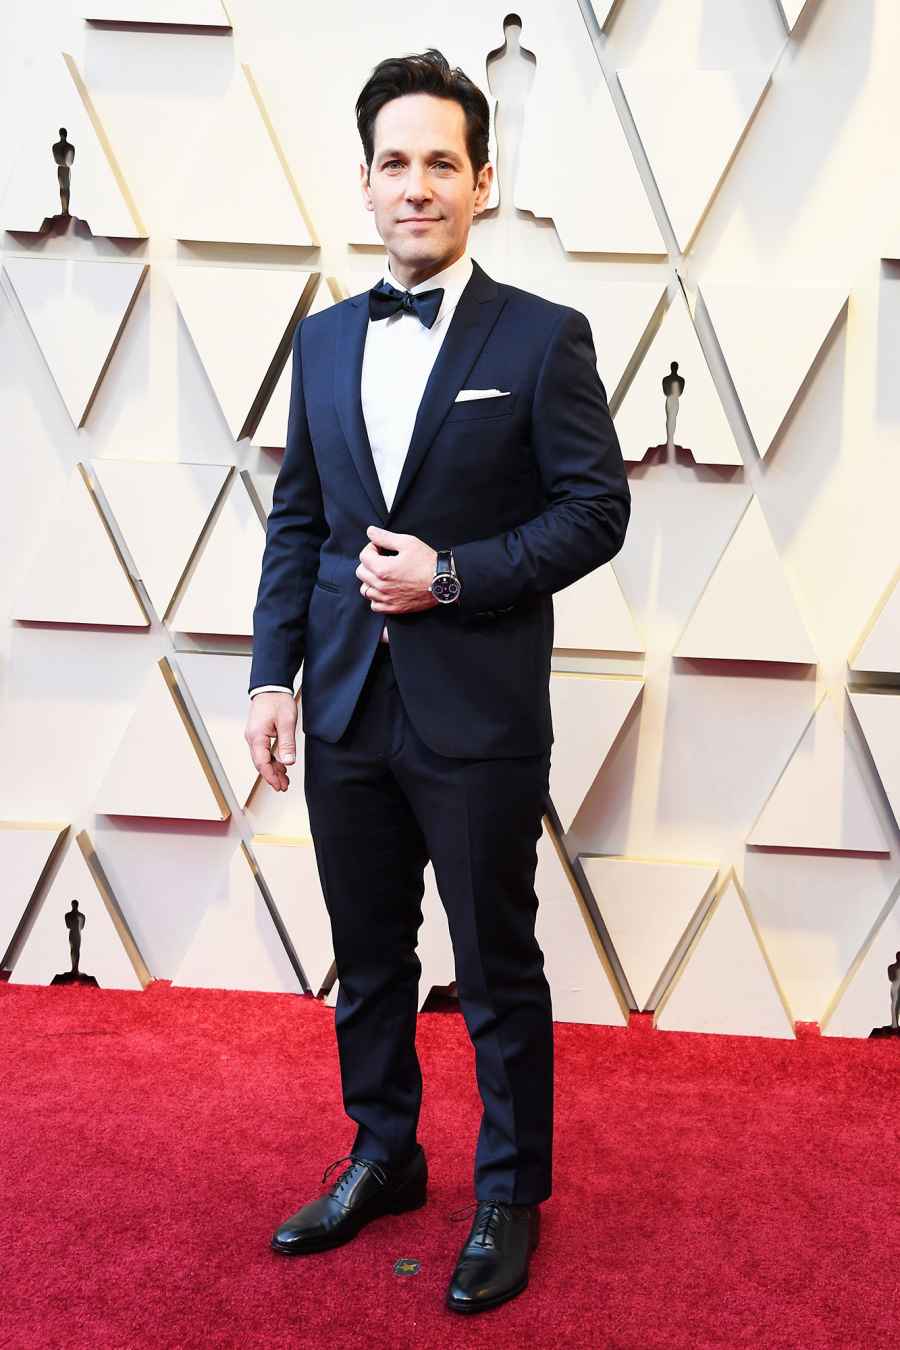 Paul Rudd Hottest Hunks at the 2019 Oscars